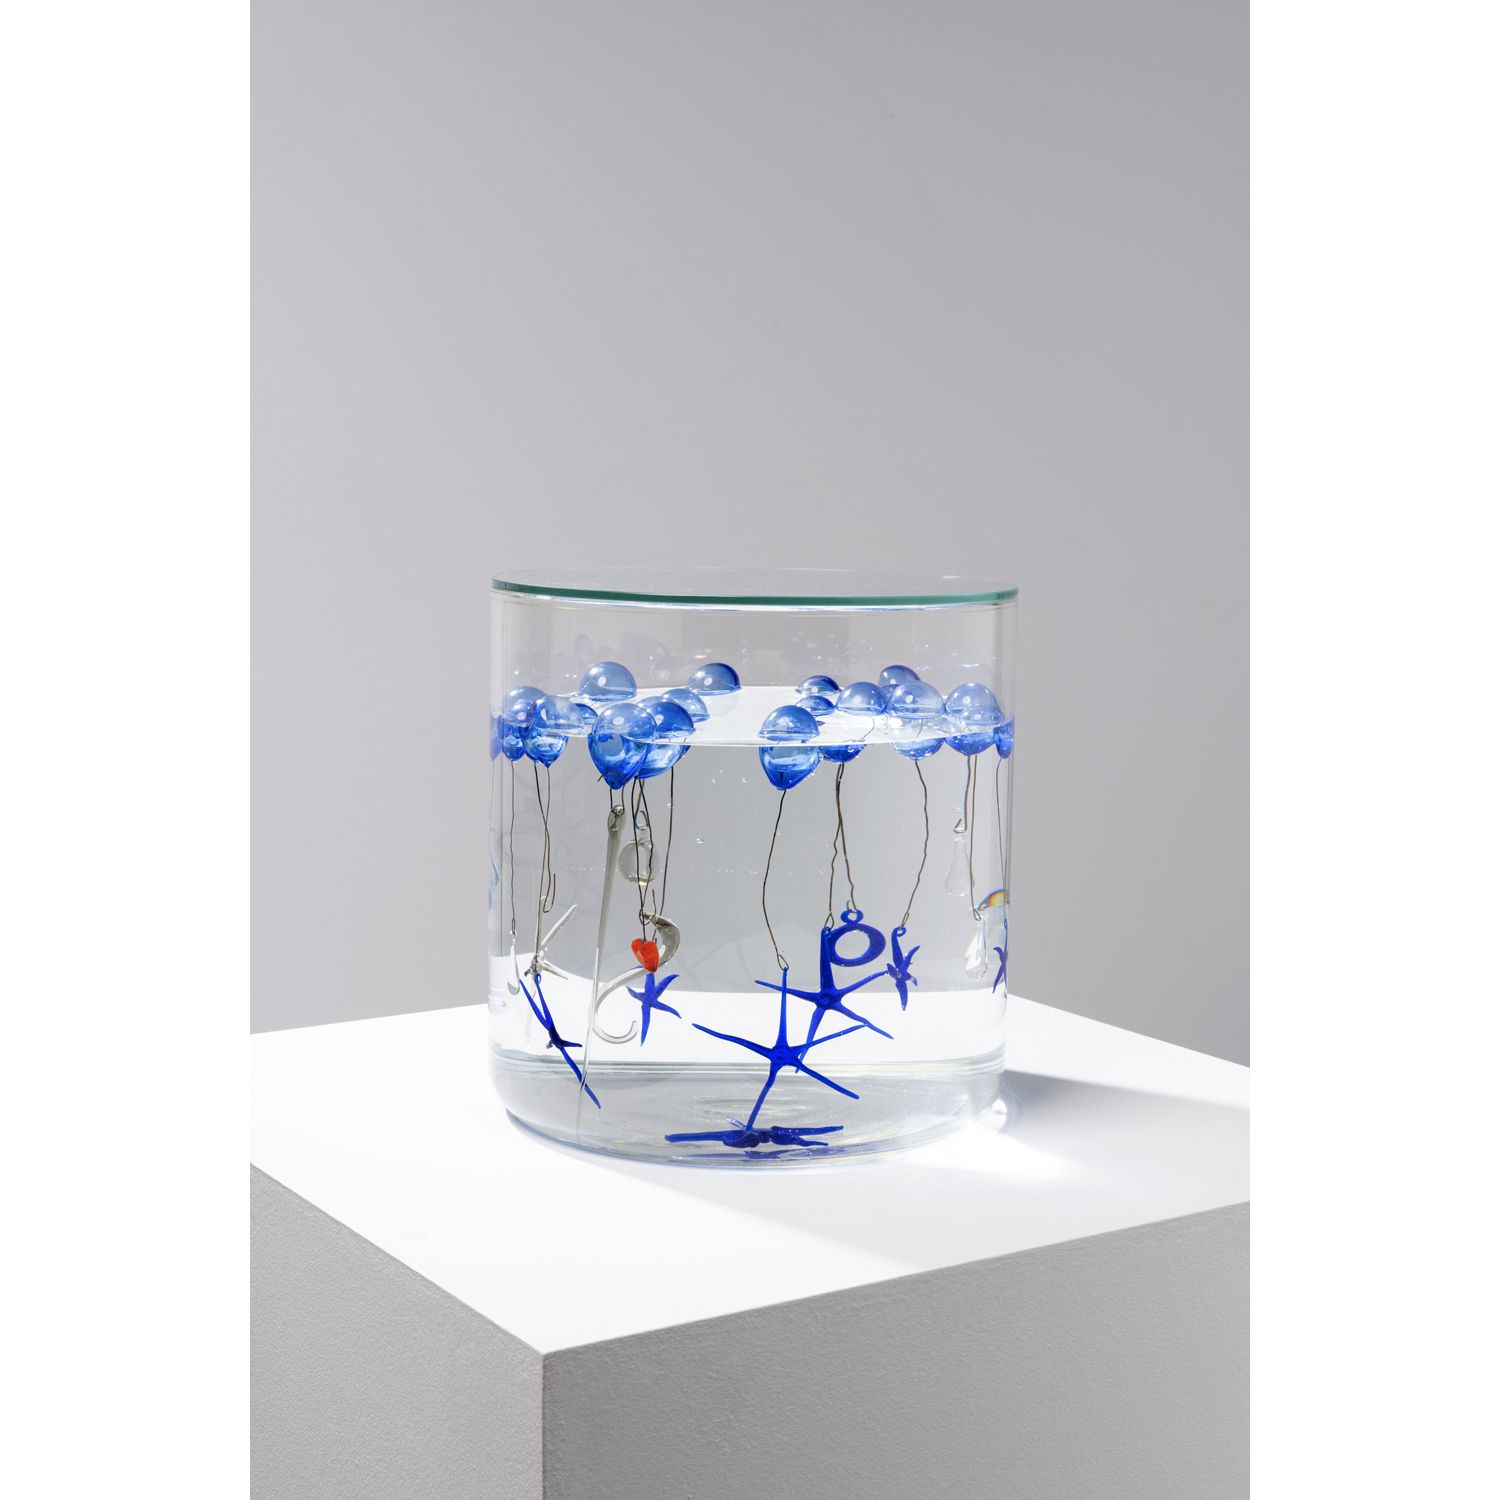 Null 让-米歇尔-奥托尼尔（生于1964年

泪水瓶，Lágrimas系列，2008年

玻璃、脱盐水、金属

高度：30厘米

直径：30厘米

出处： &hellip;